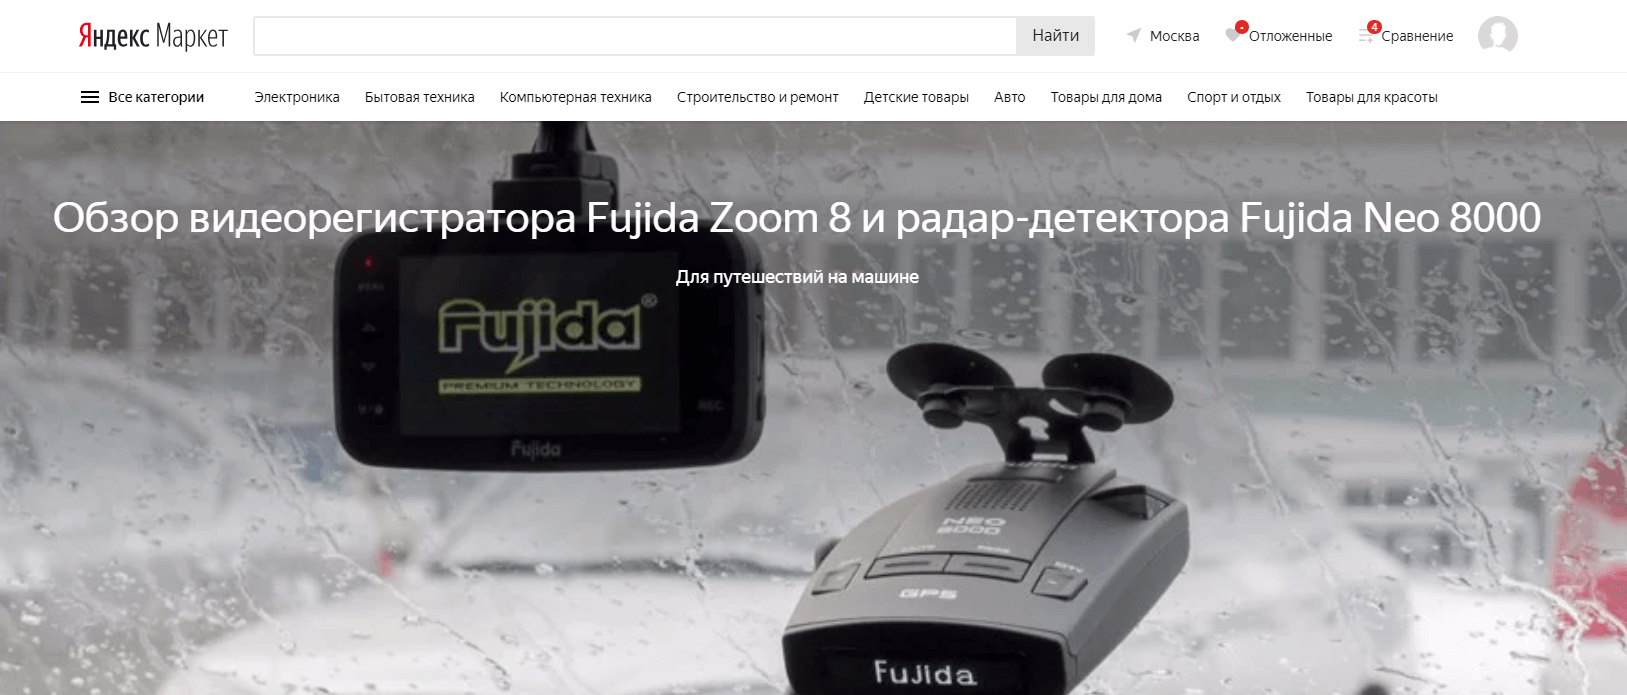 Fujida Zoom 8. Full Hd видеорегистратор